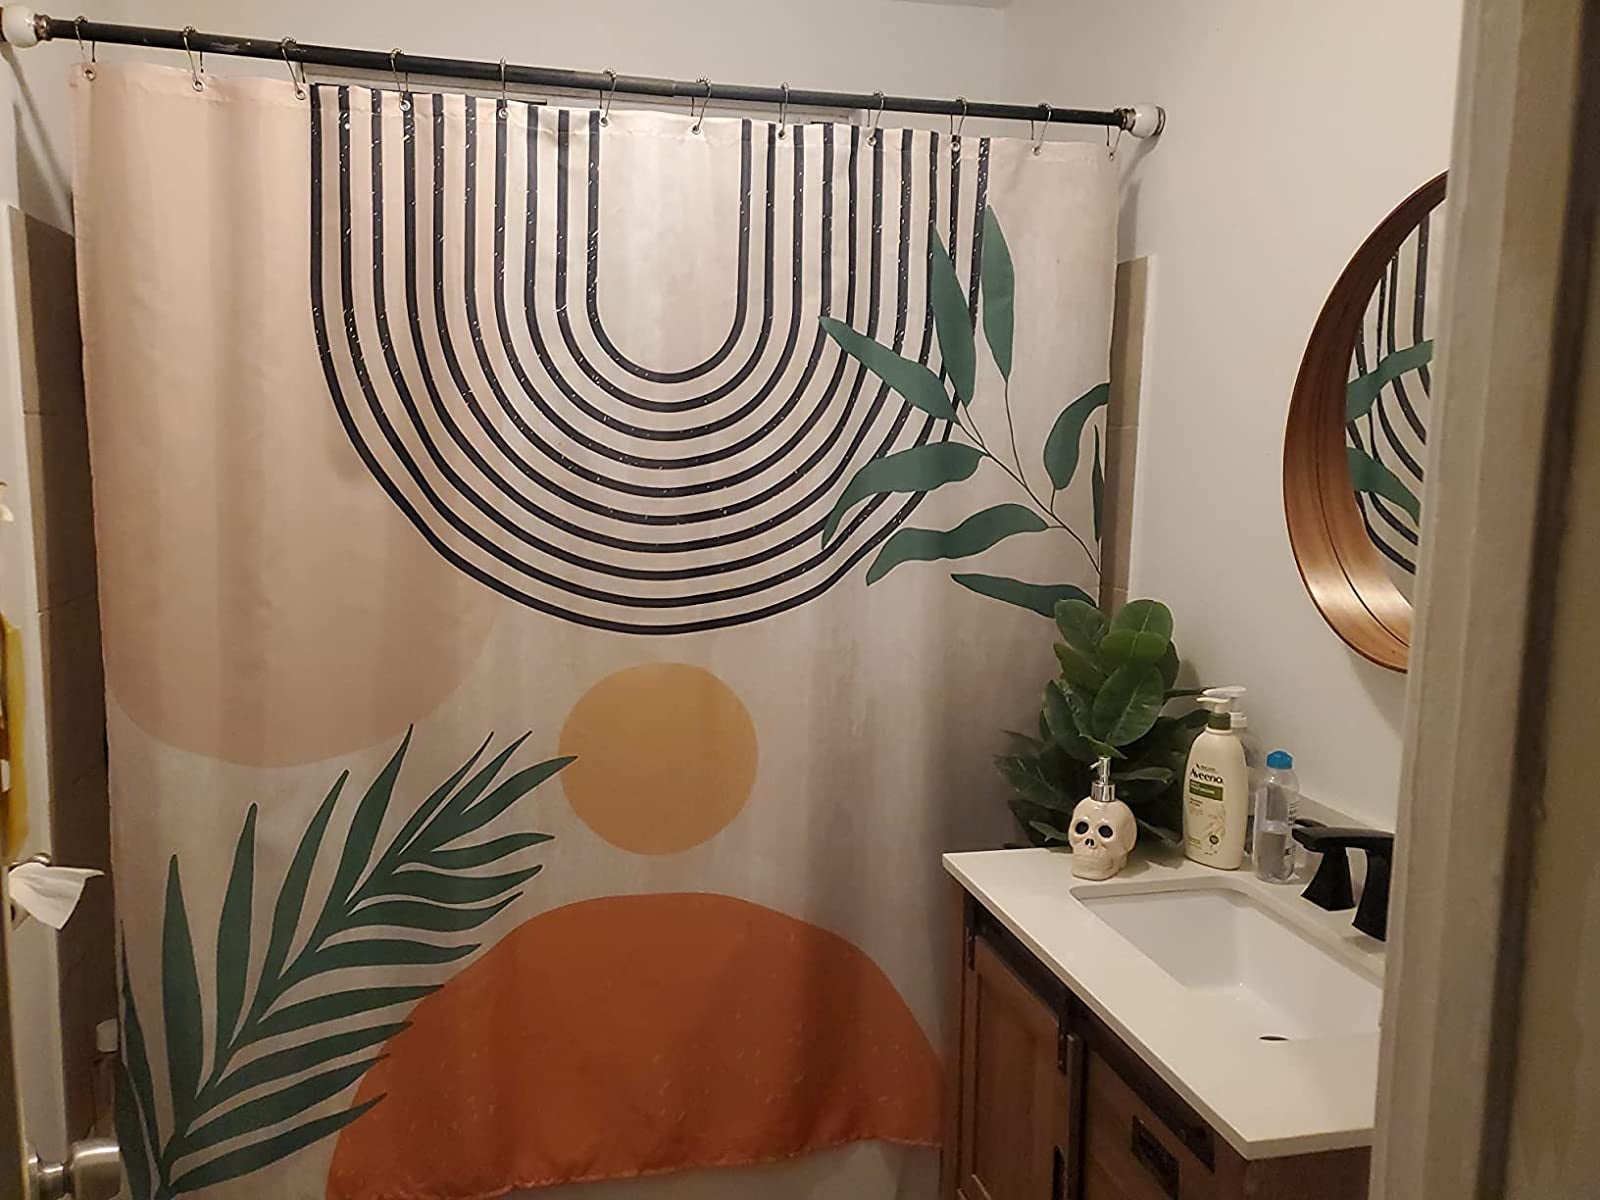 the minimalist sunset designed shower curtain